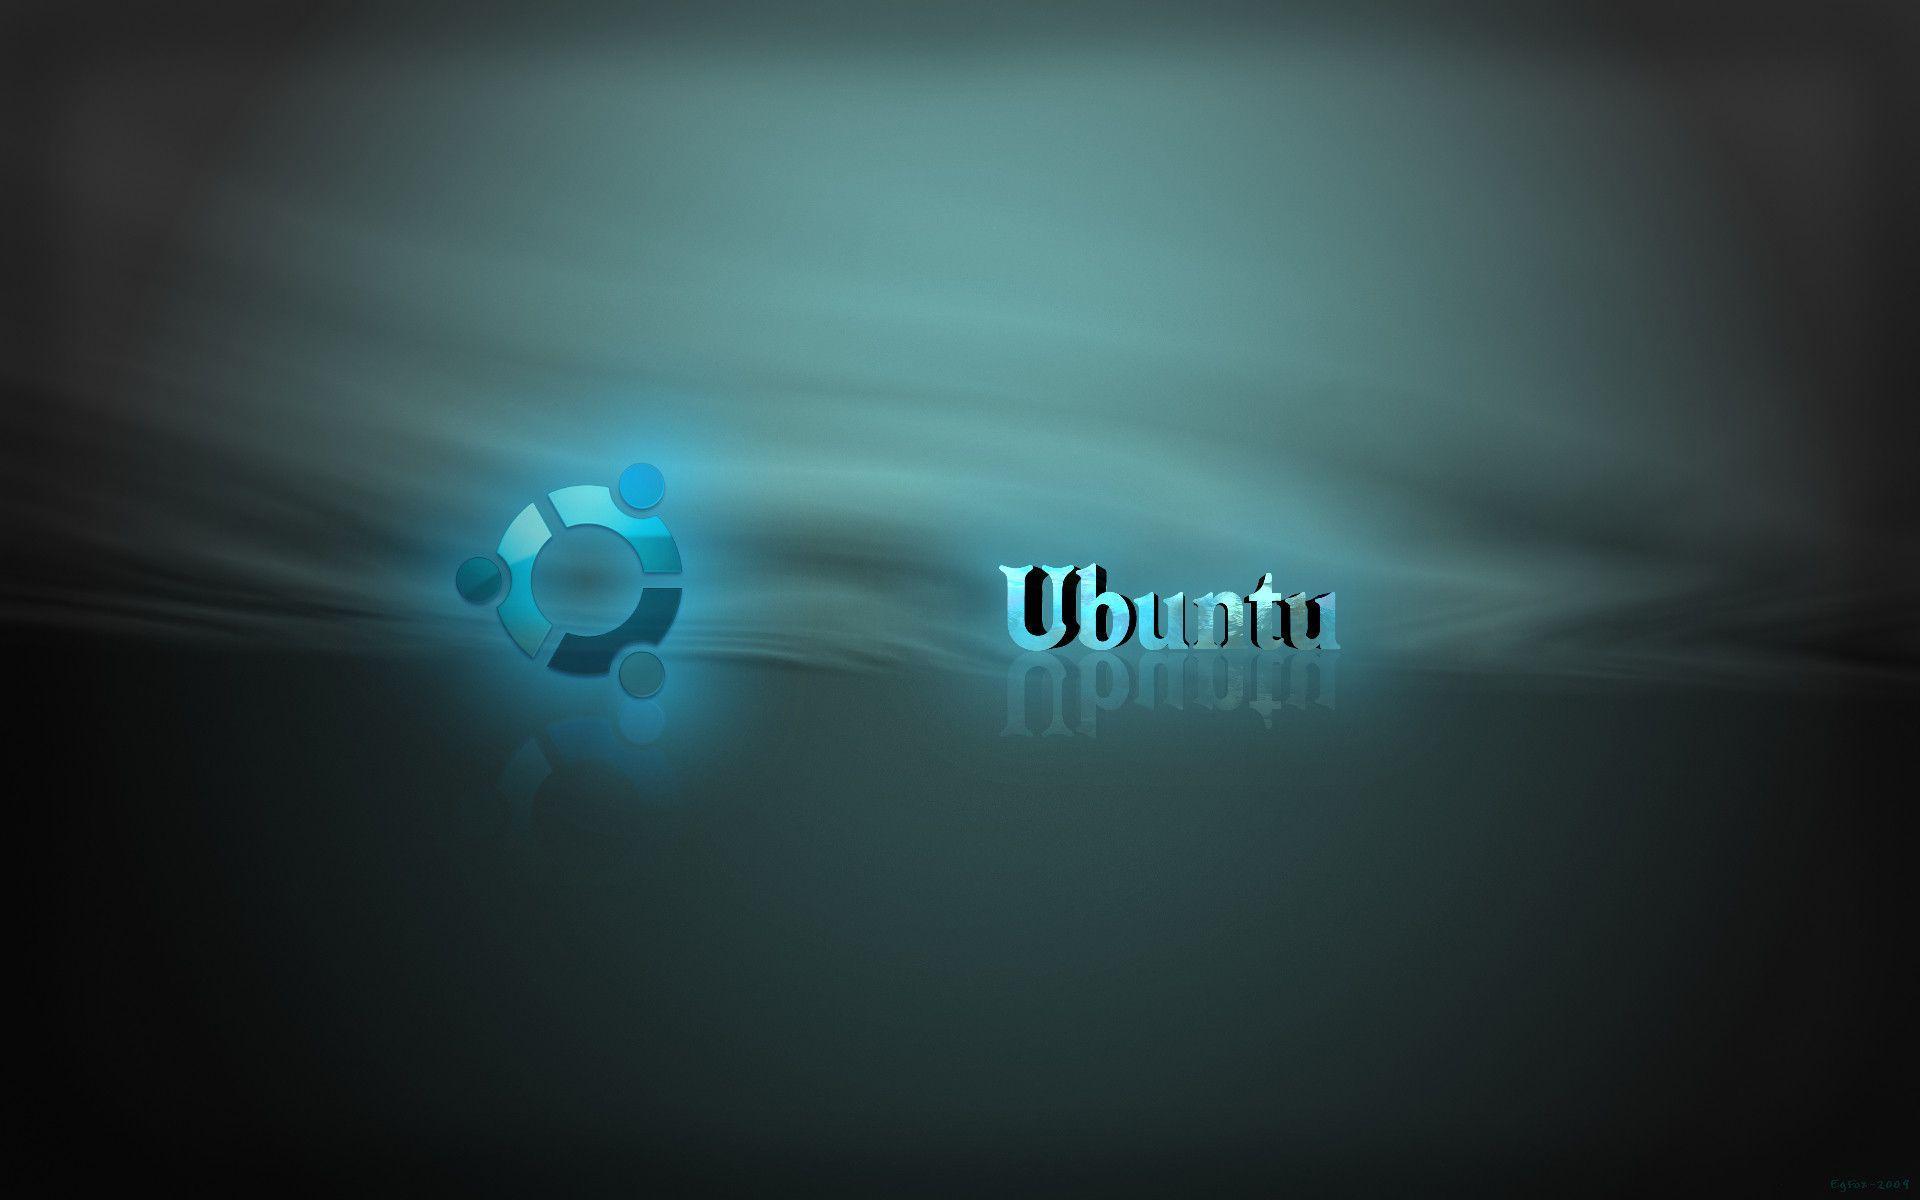 image For > Ubuntu Desktop Background